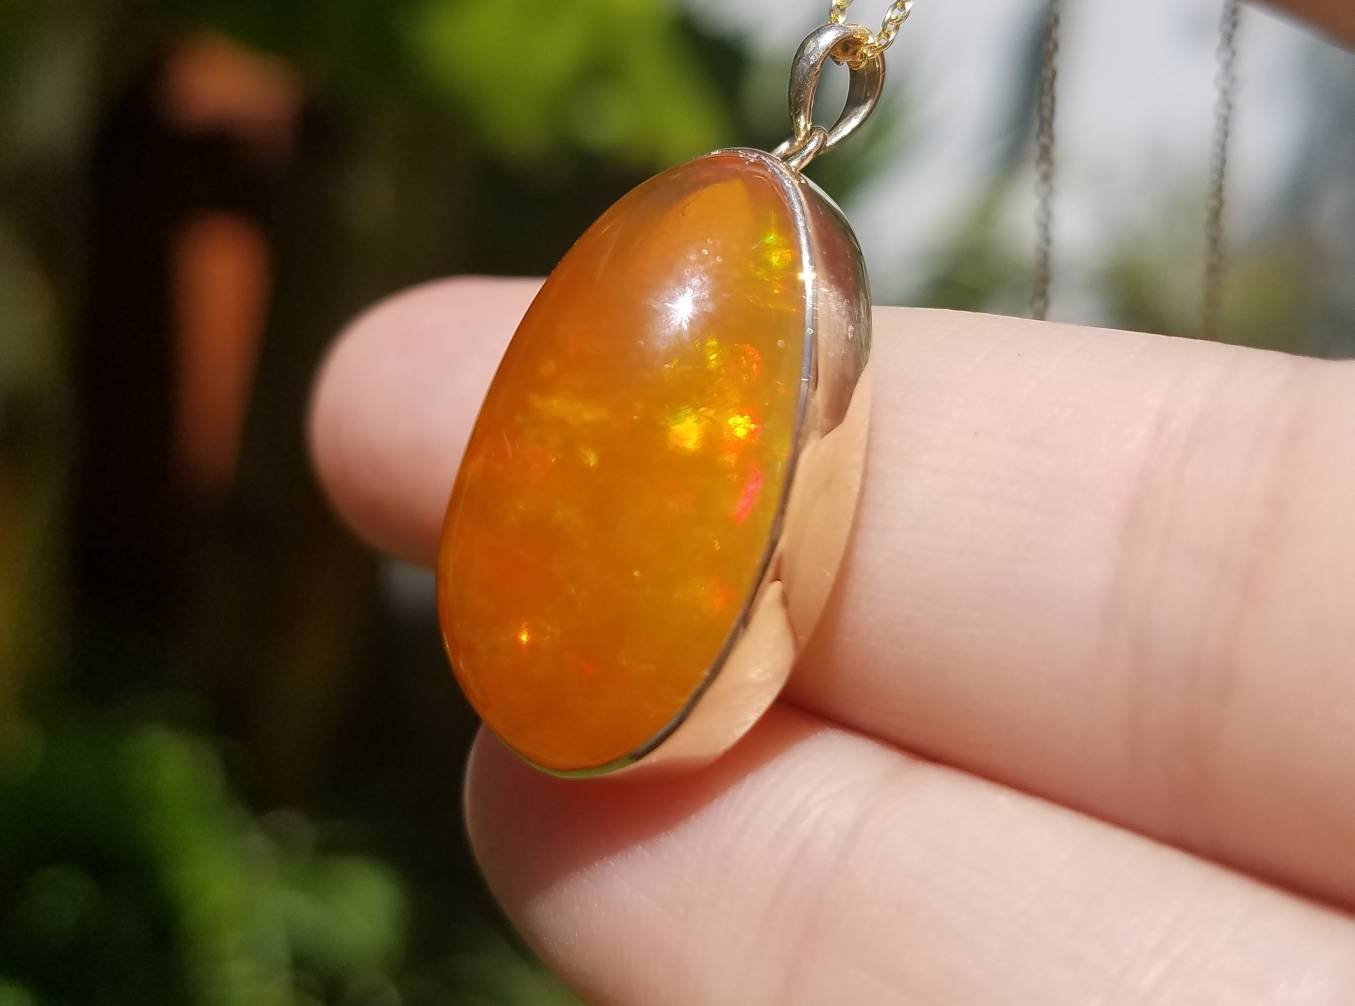 Ethiopian Orange Opal Pendant Necklace - 14k Yellow Gold #1524